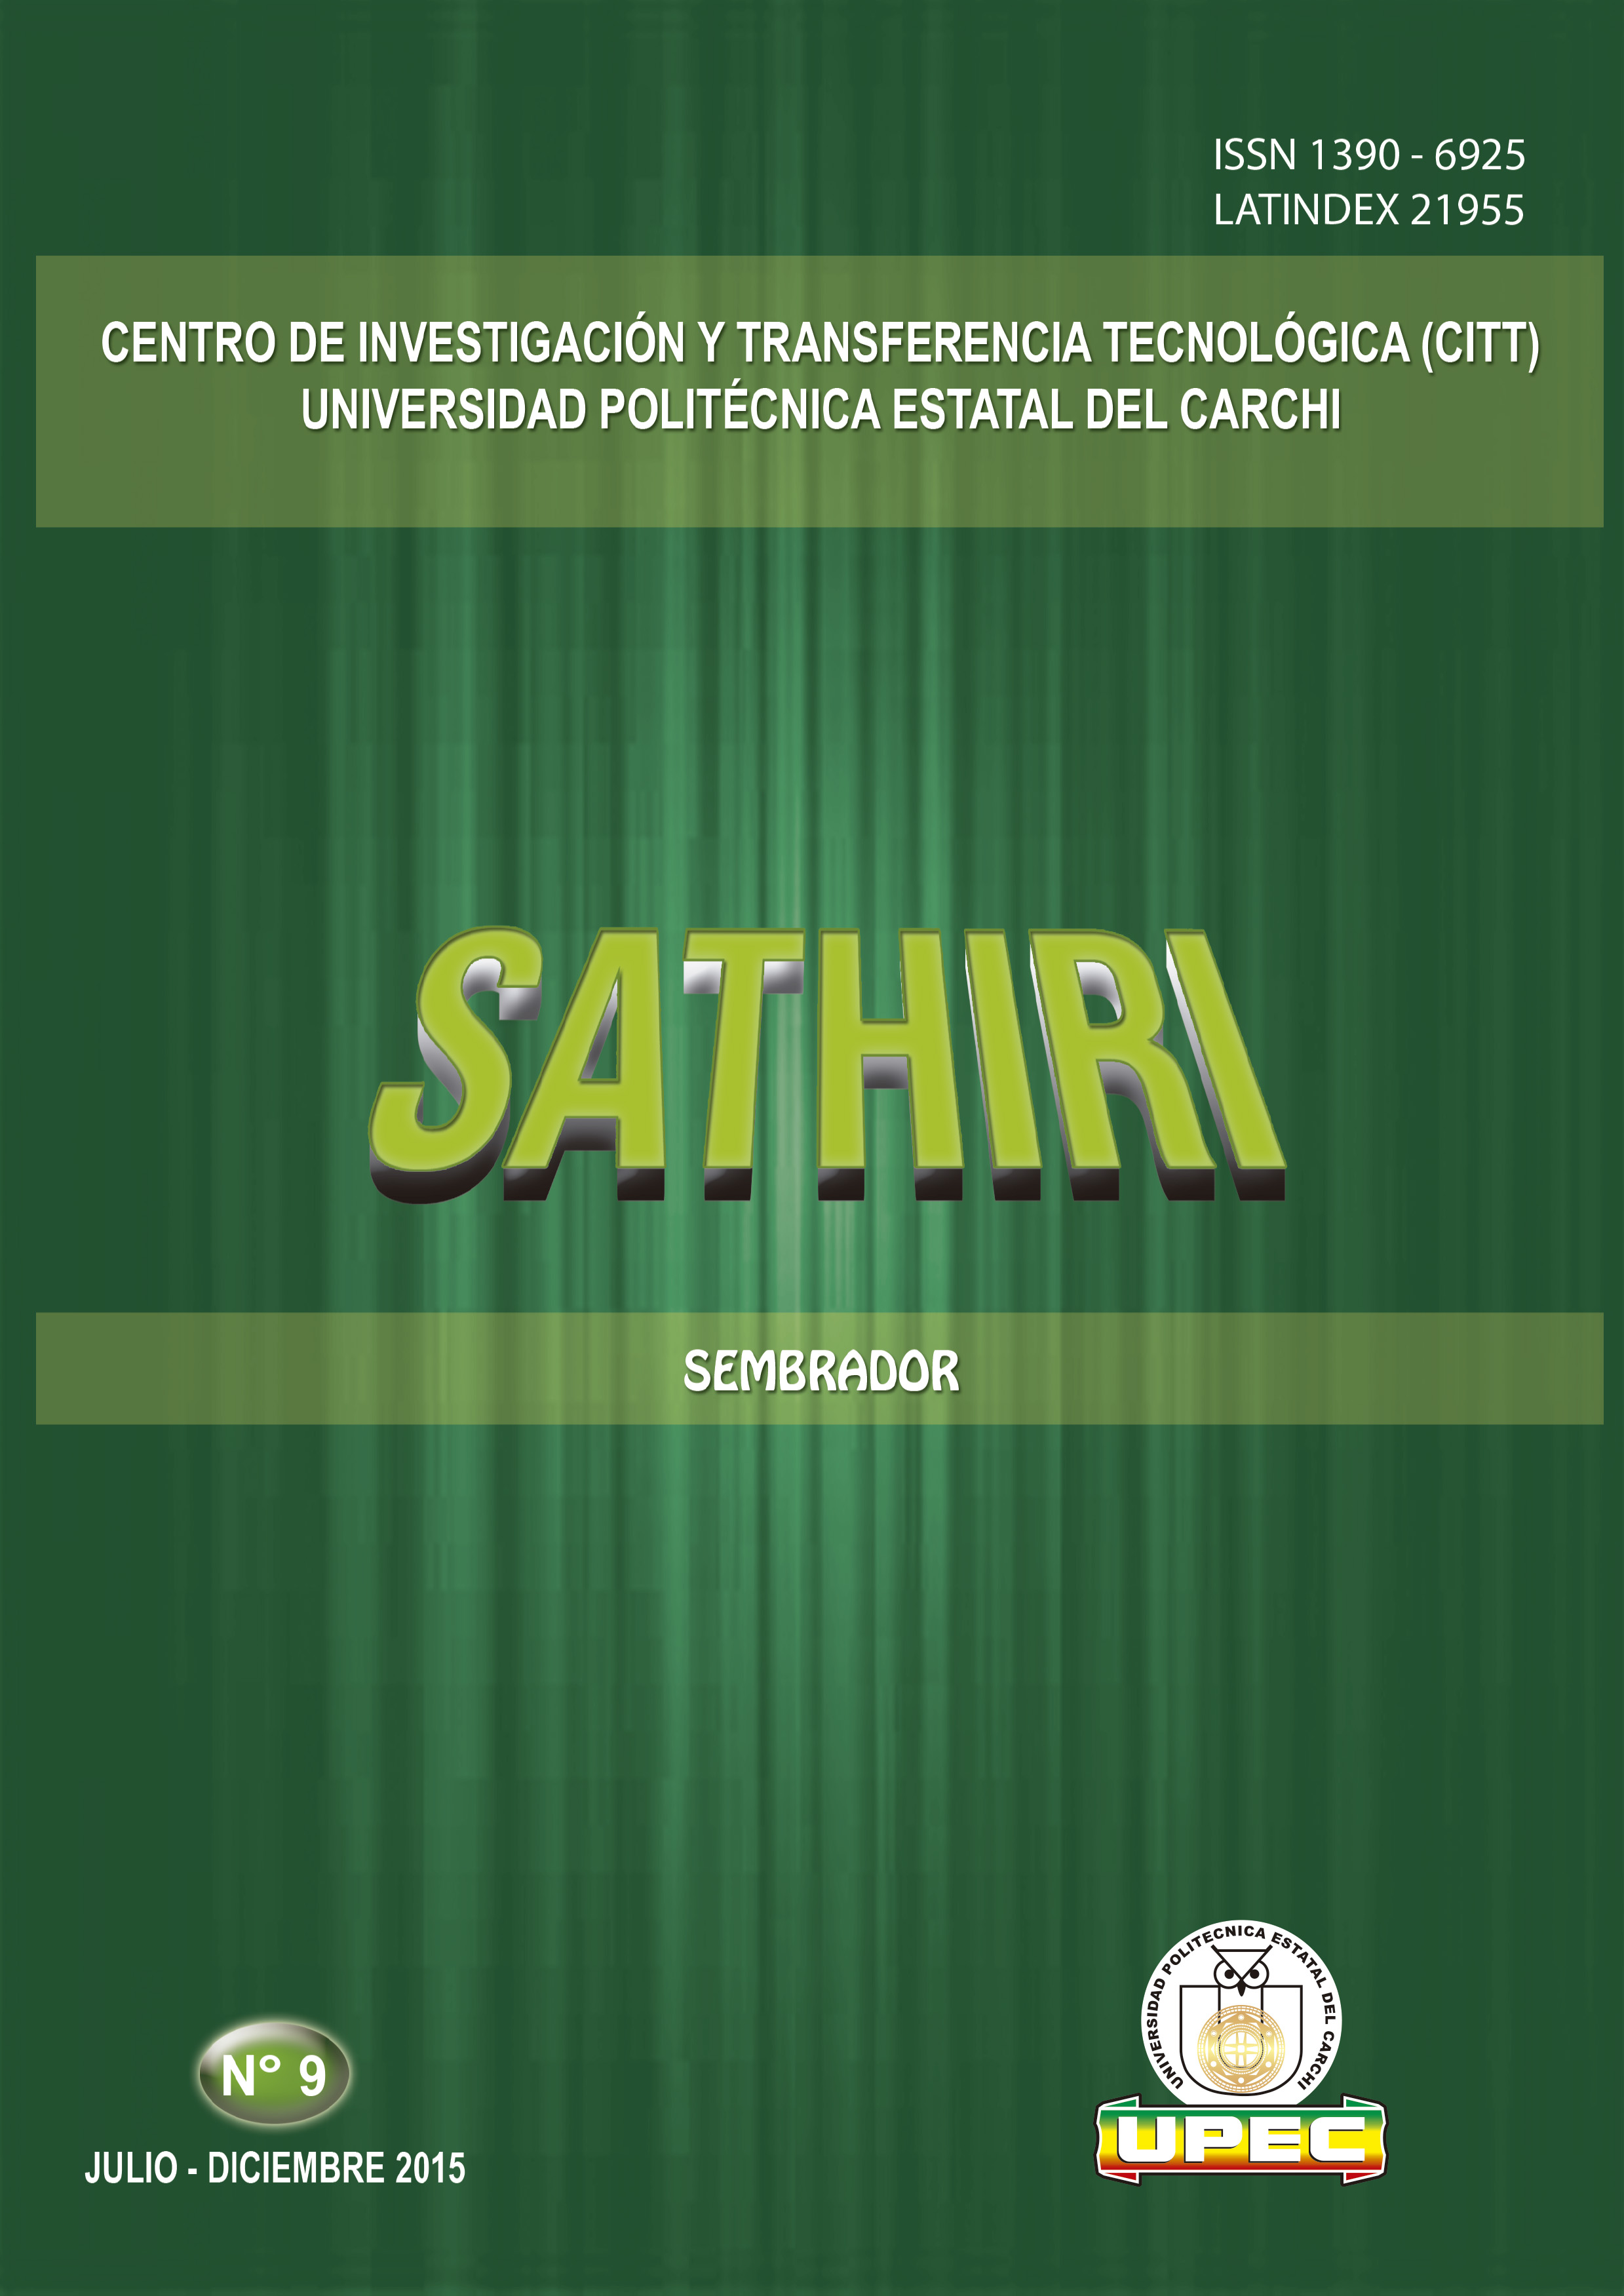 					Ver Núm. 9 (2015): Revista SATHIRI: Sembrador No. 9 (Julio - Diciembre)
				